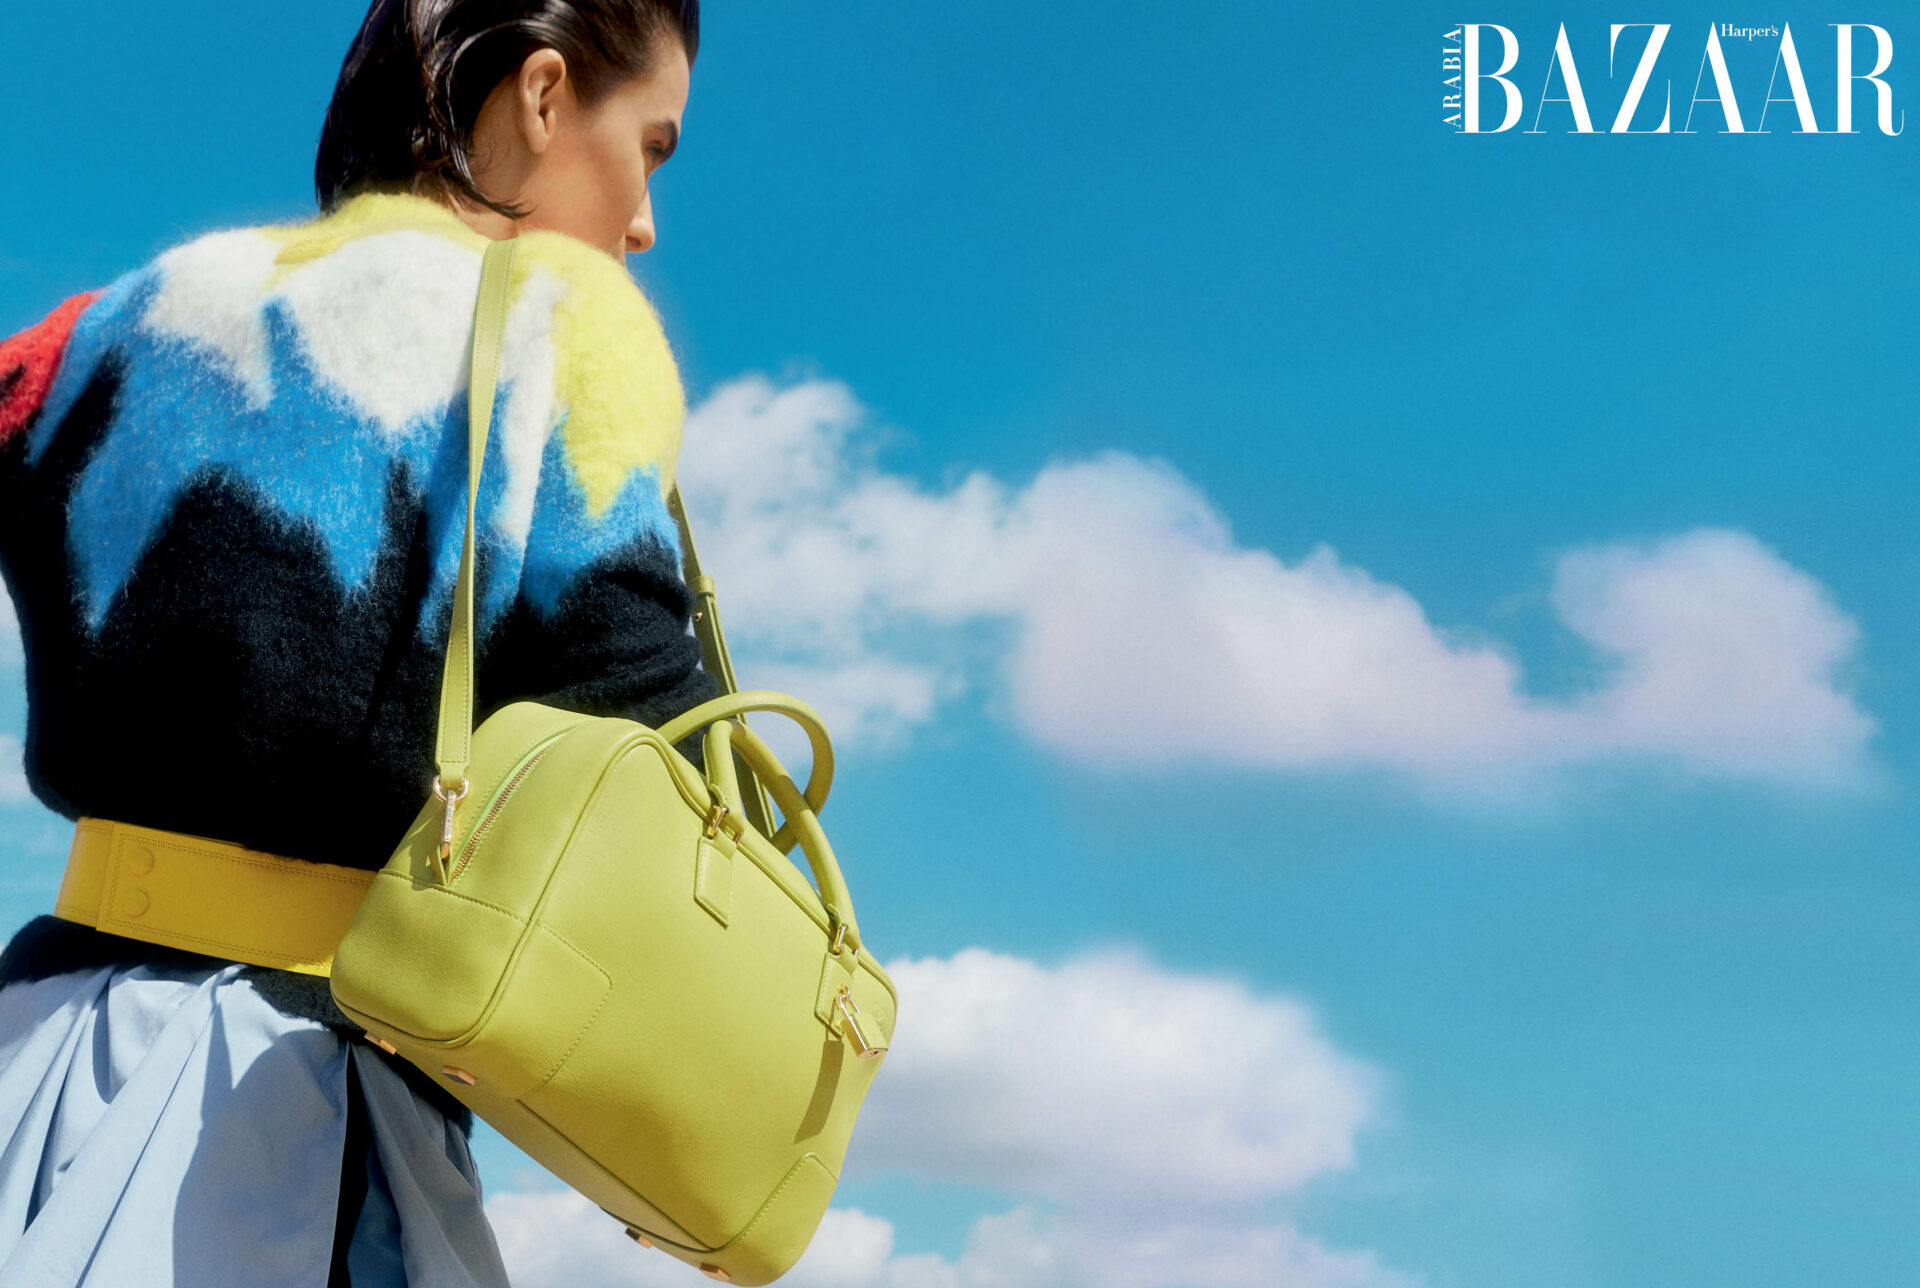 Buy Barmer Bazaar Leather Duffle Bags for Men, Luggage Bag for Travel,  Duffel Bag for Travel (24 Inch) at Amazon.in